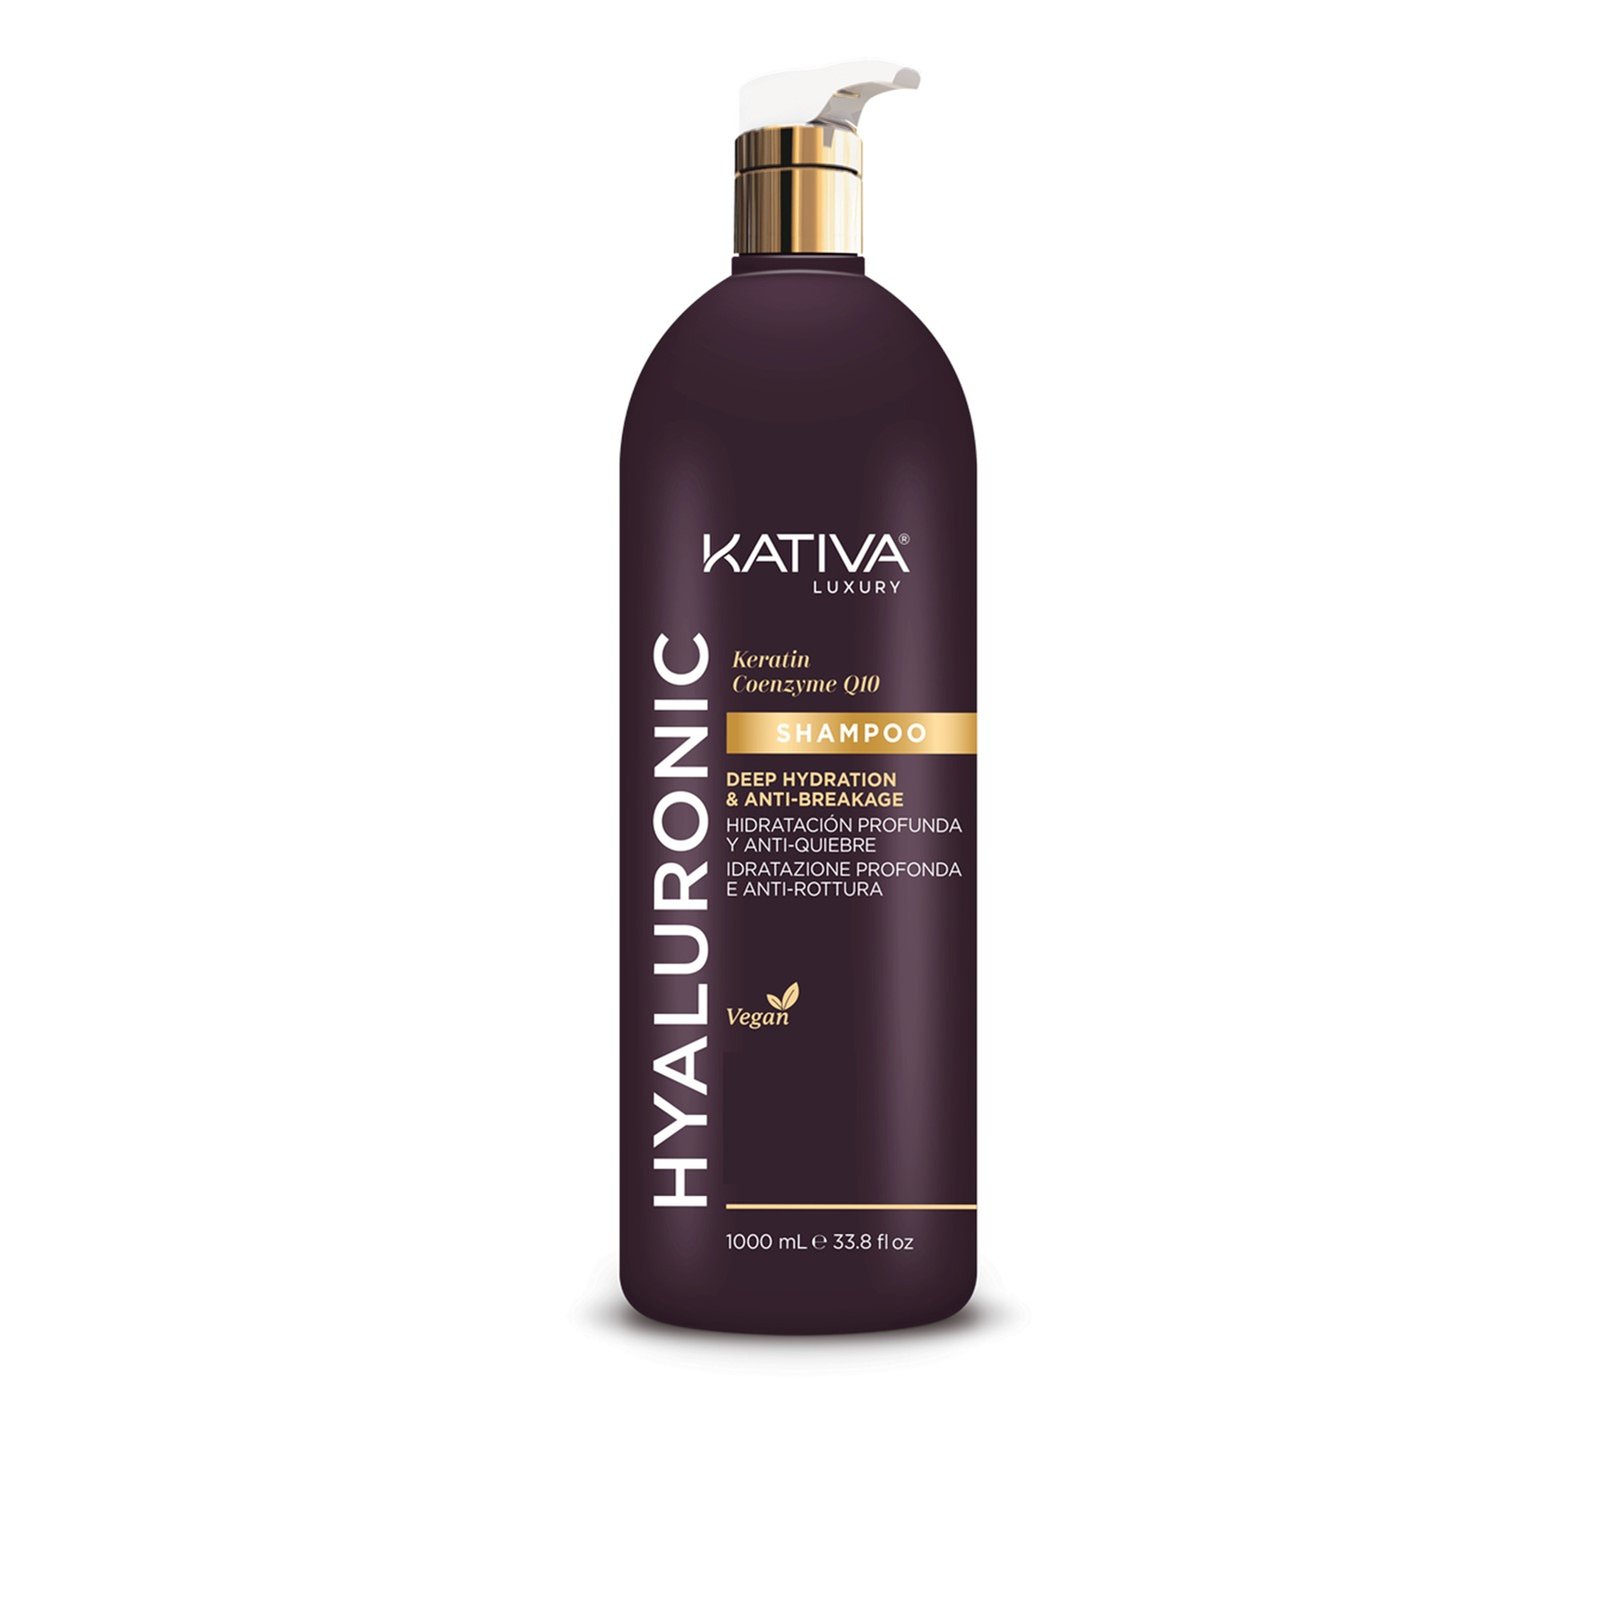 Kativa Luxury Hyaluronic Deep Hydration & Anti-Breakage Shampoo 1L (33.8 fl oz)